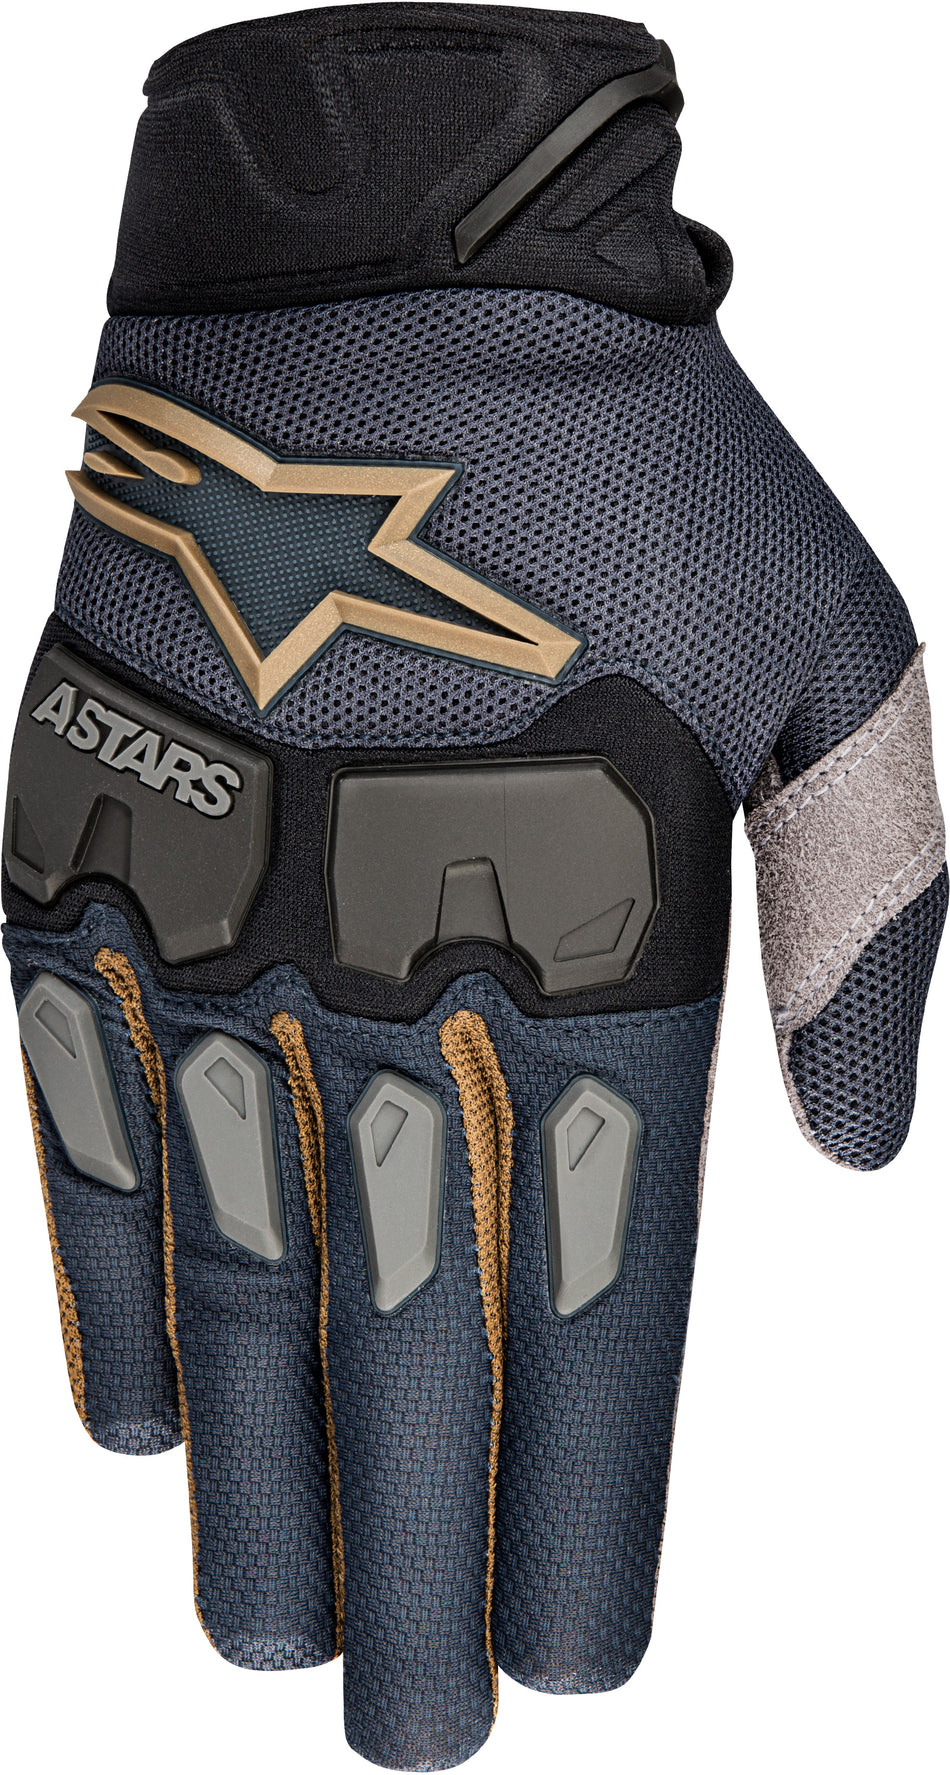 ALPINESTARS Aviator Racefend Gloves Black/Gold/Grey Md 3563518-7159-M